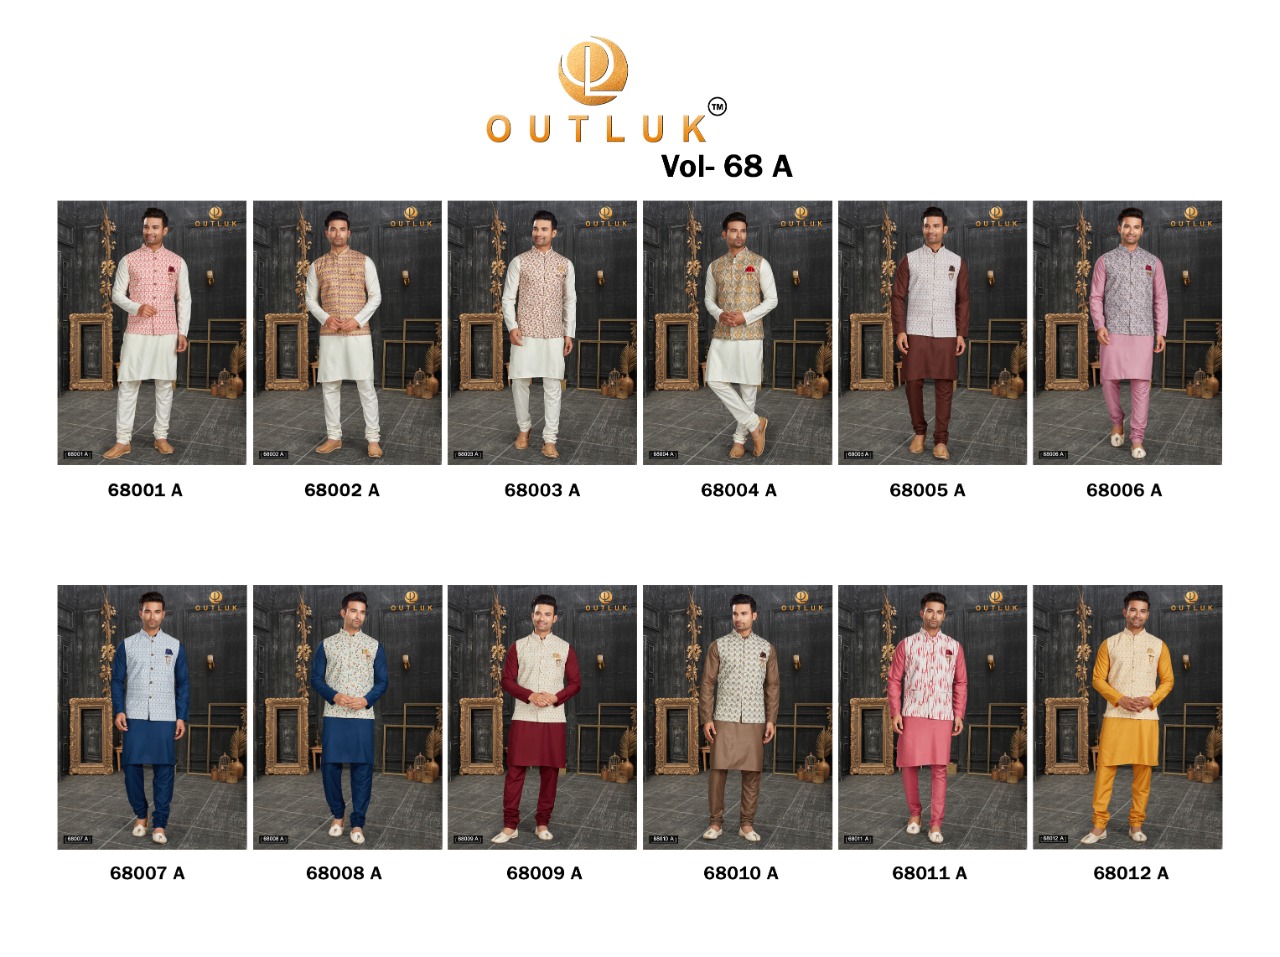 Outluk Vol 68 A collection 13